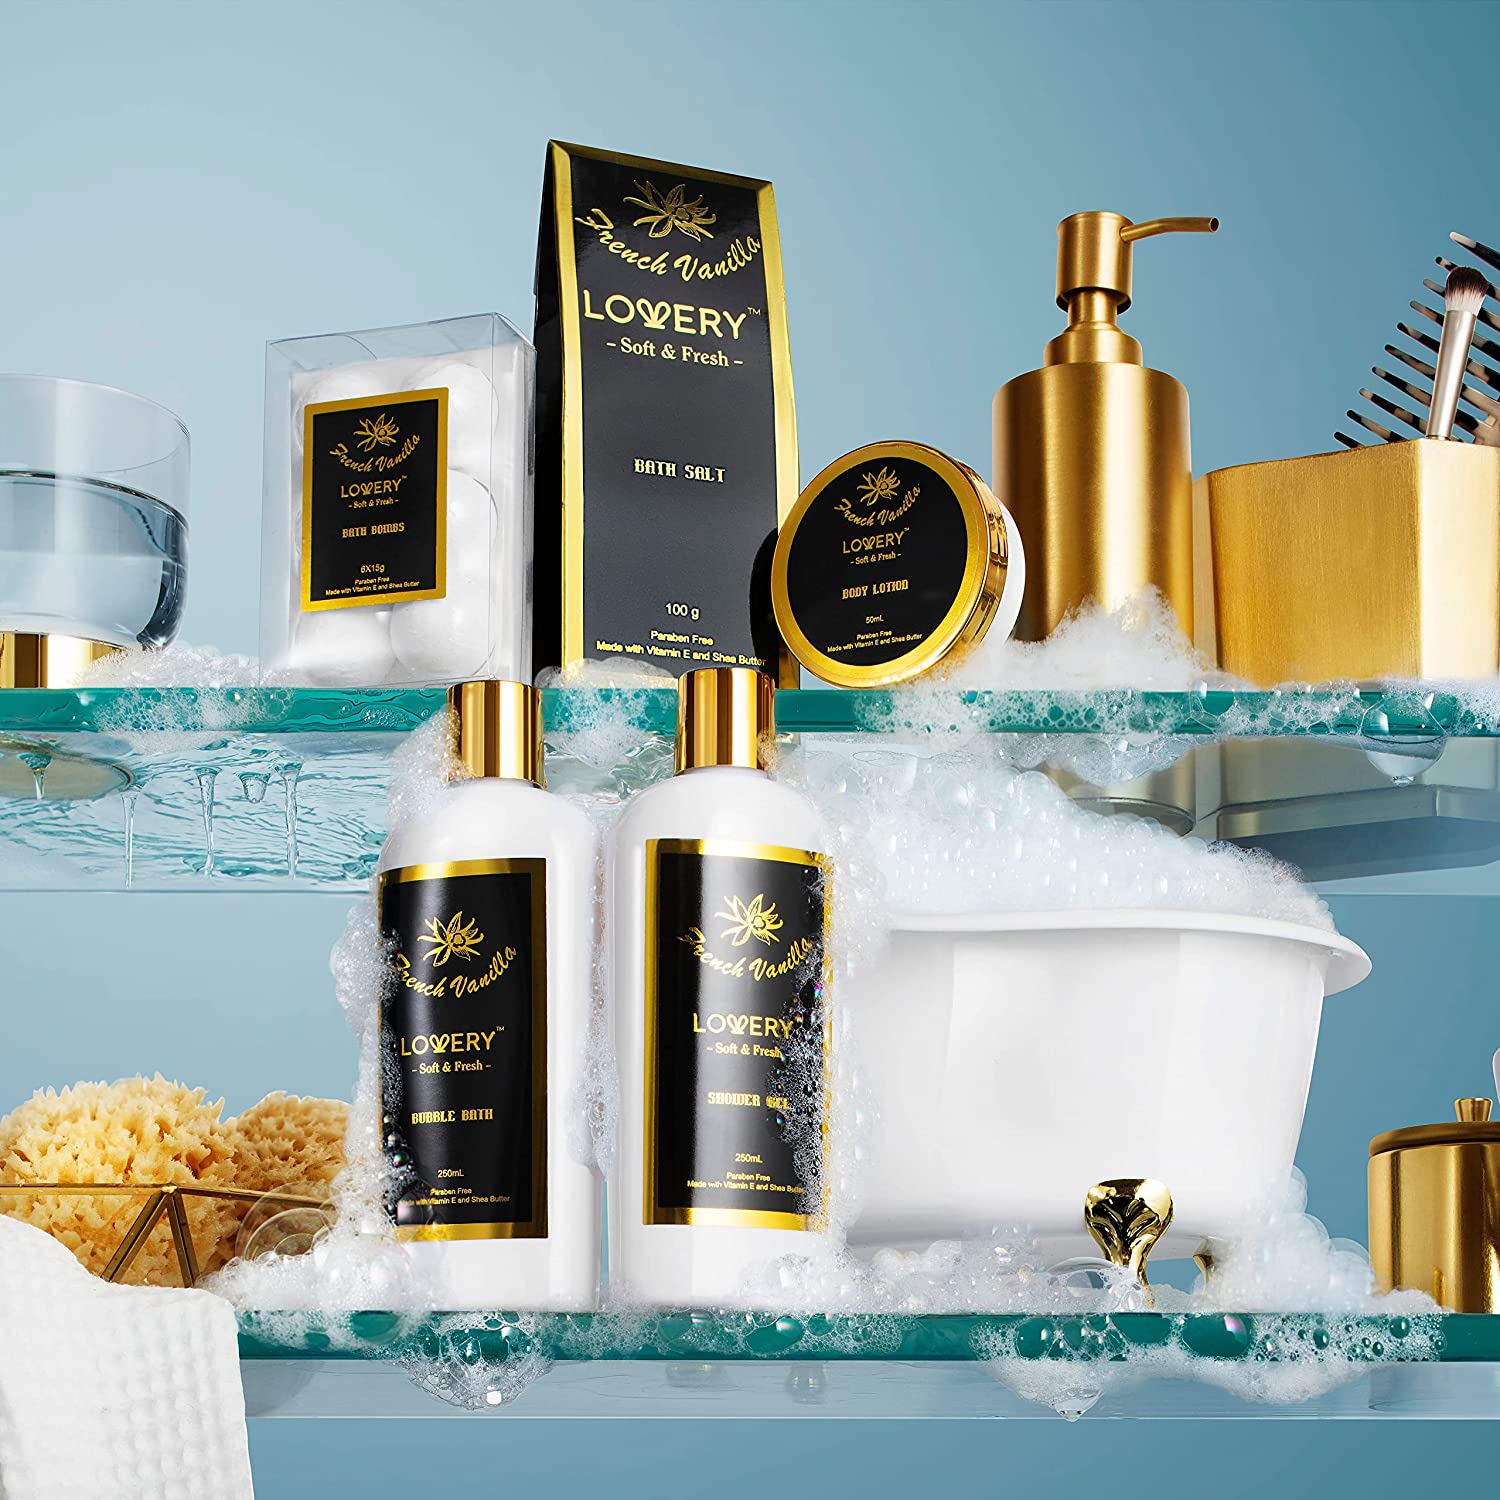  Spa Gift Basket – Bath and Body Set with Vanilla Fragrance by  Lovestee - Gift Basket Includes Shower Gel, Body Lotion, Hand Lotion, Bath  Salt, Eva Sponge and a Bath